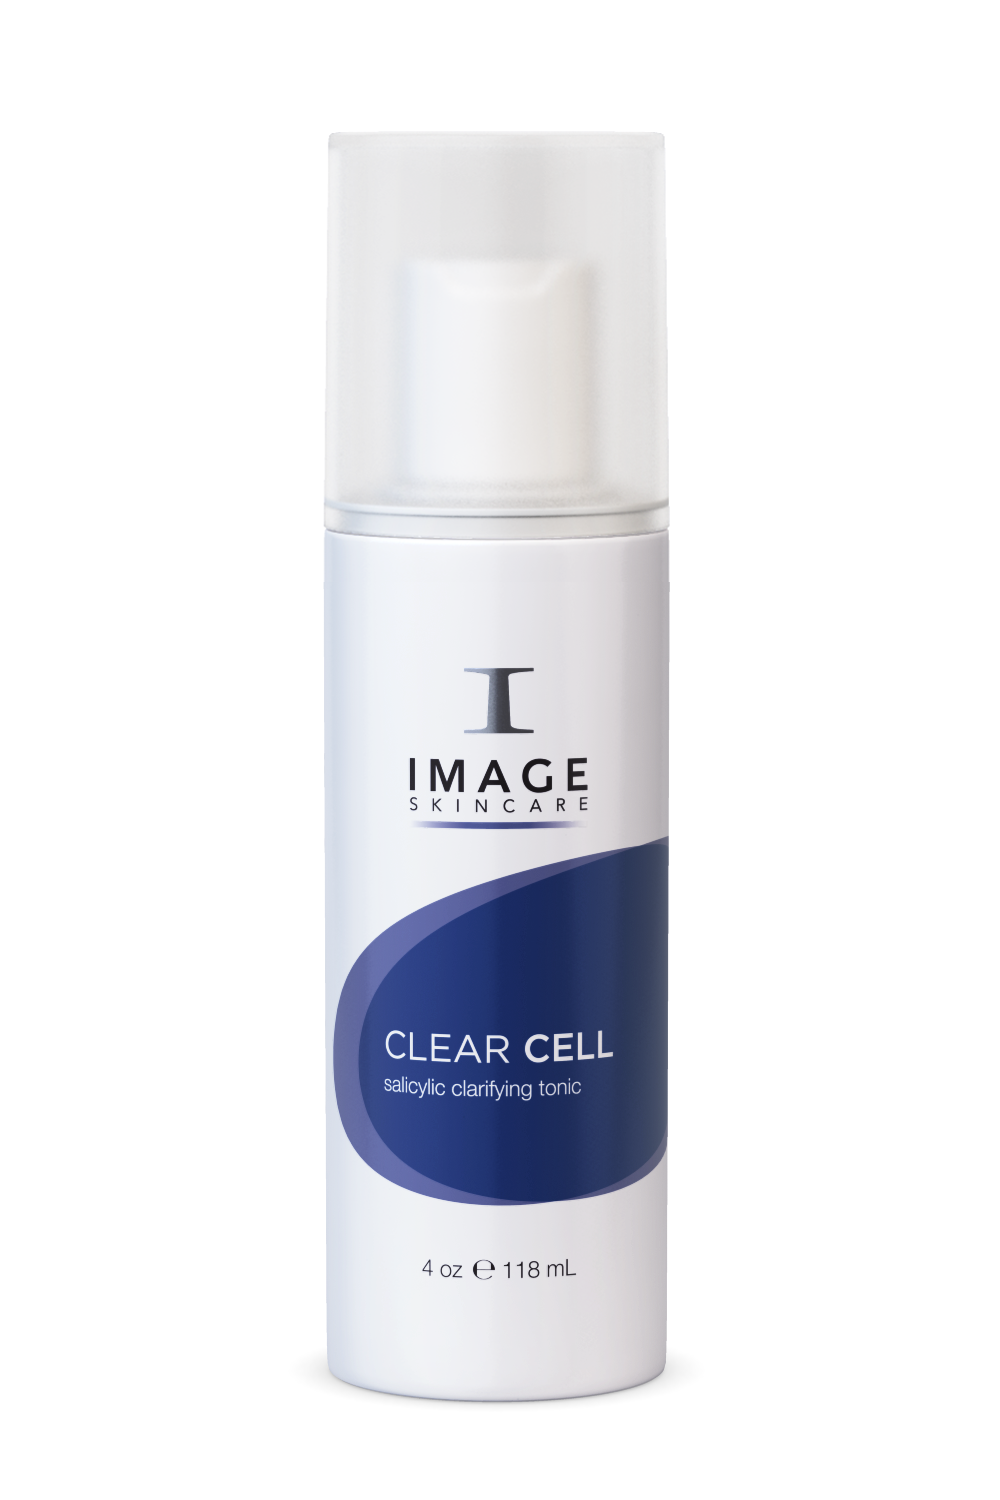 Clear cell. Image Skincare салициловый тоник. Image Clear Cell очищающий салициловый гель. Тоник для жирной кожи. Тоник для лица для жирной кожи.